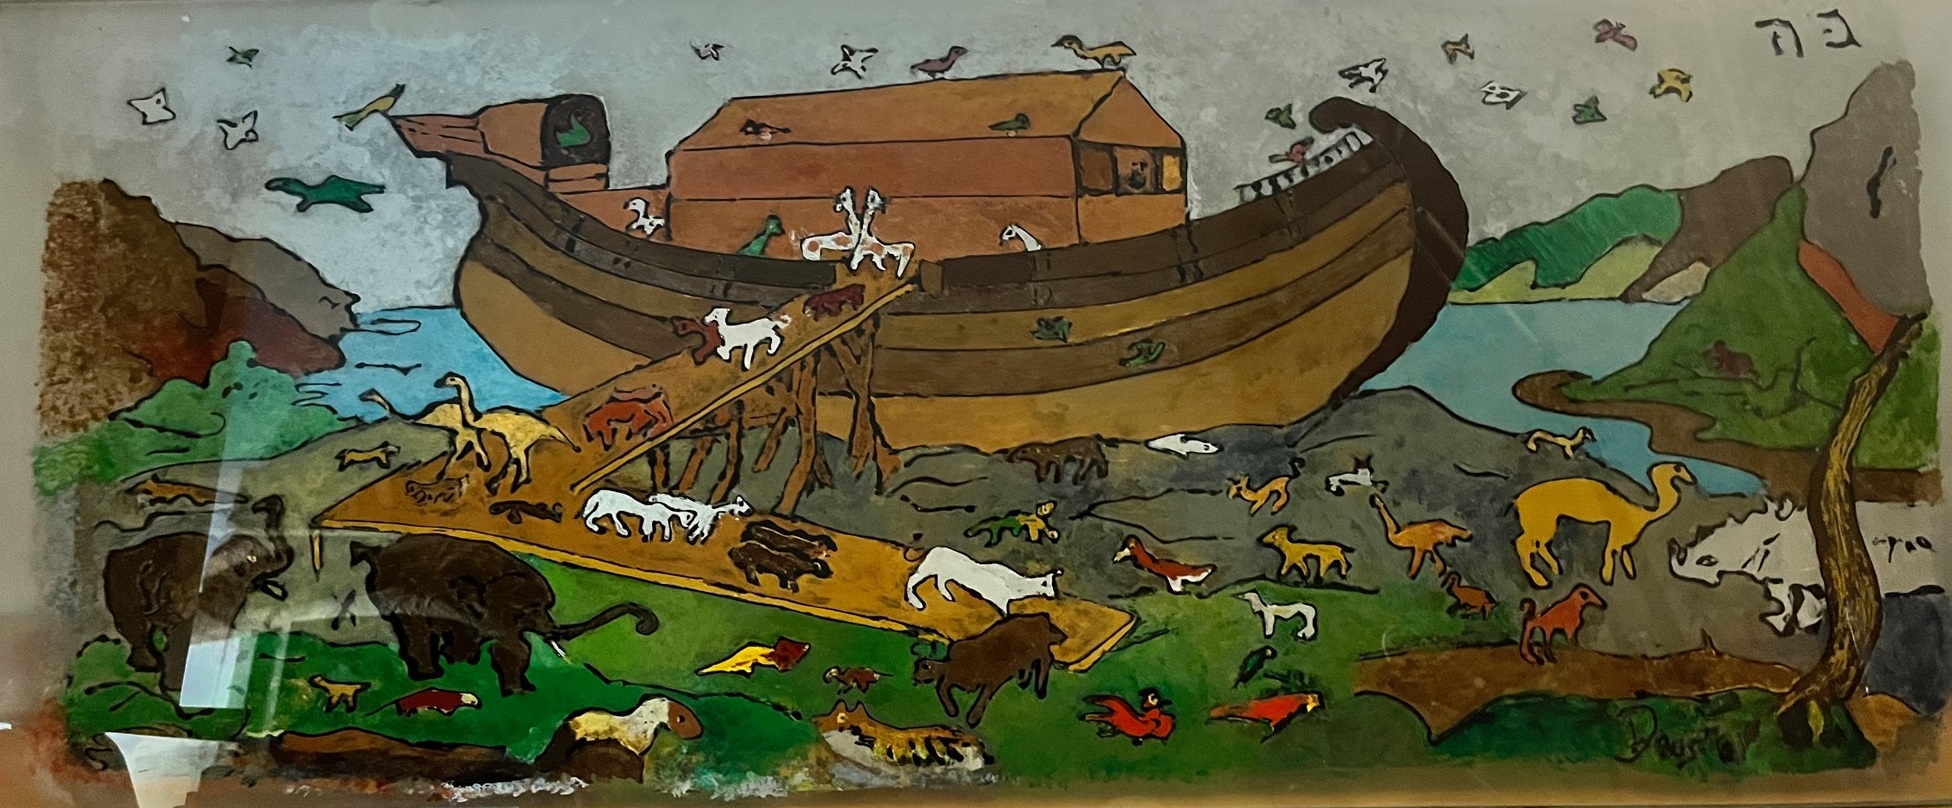 Noah's Ark on glass